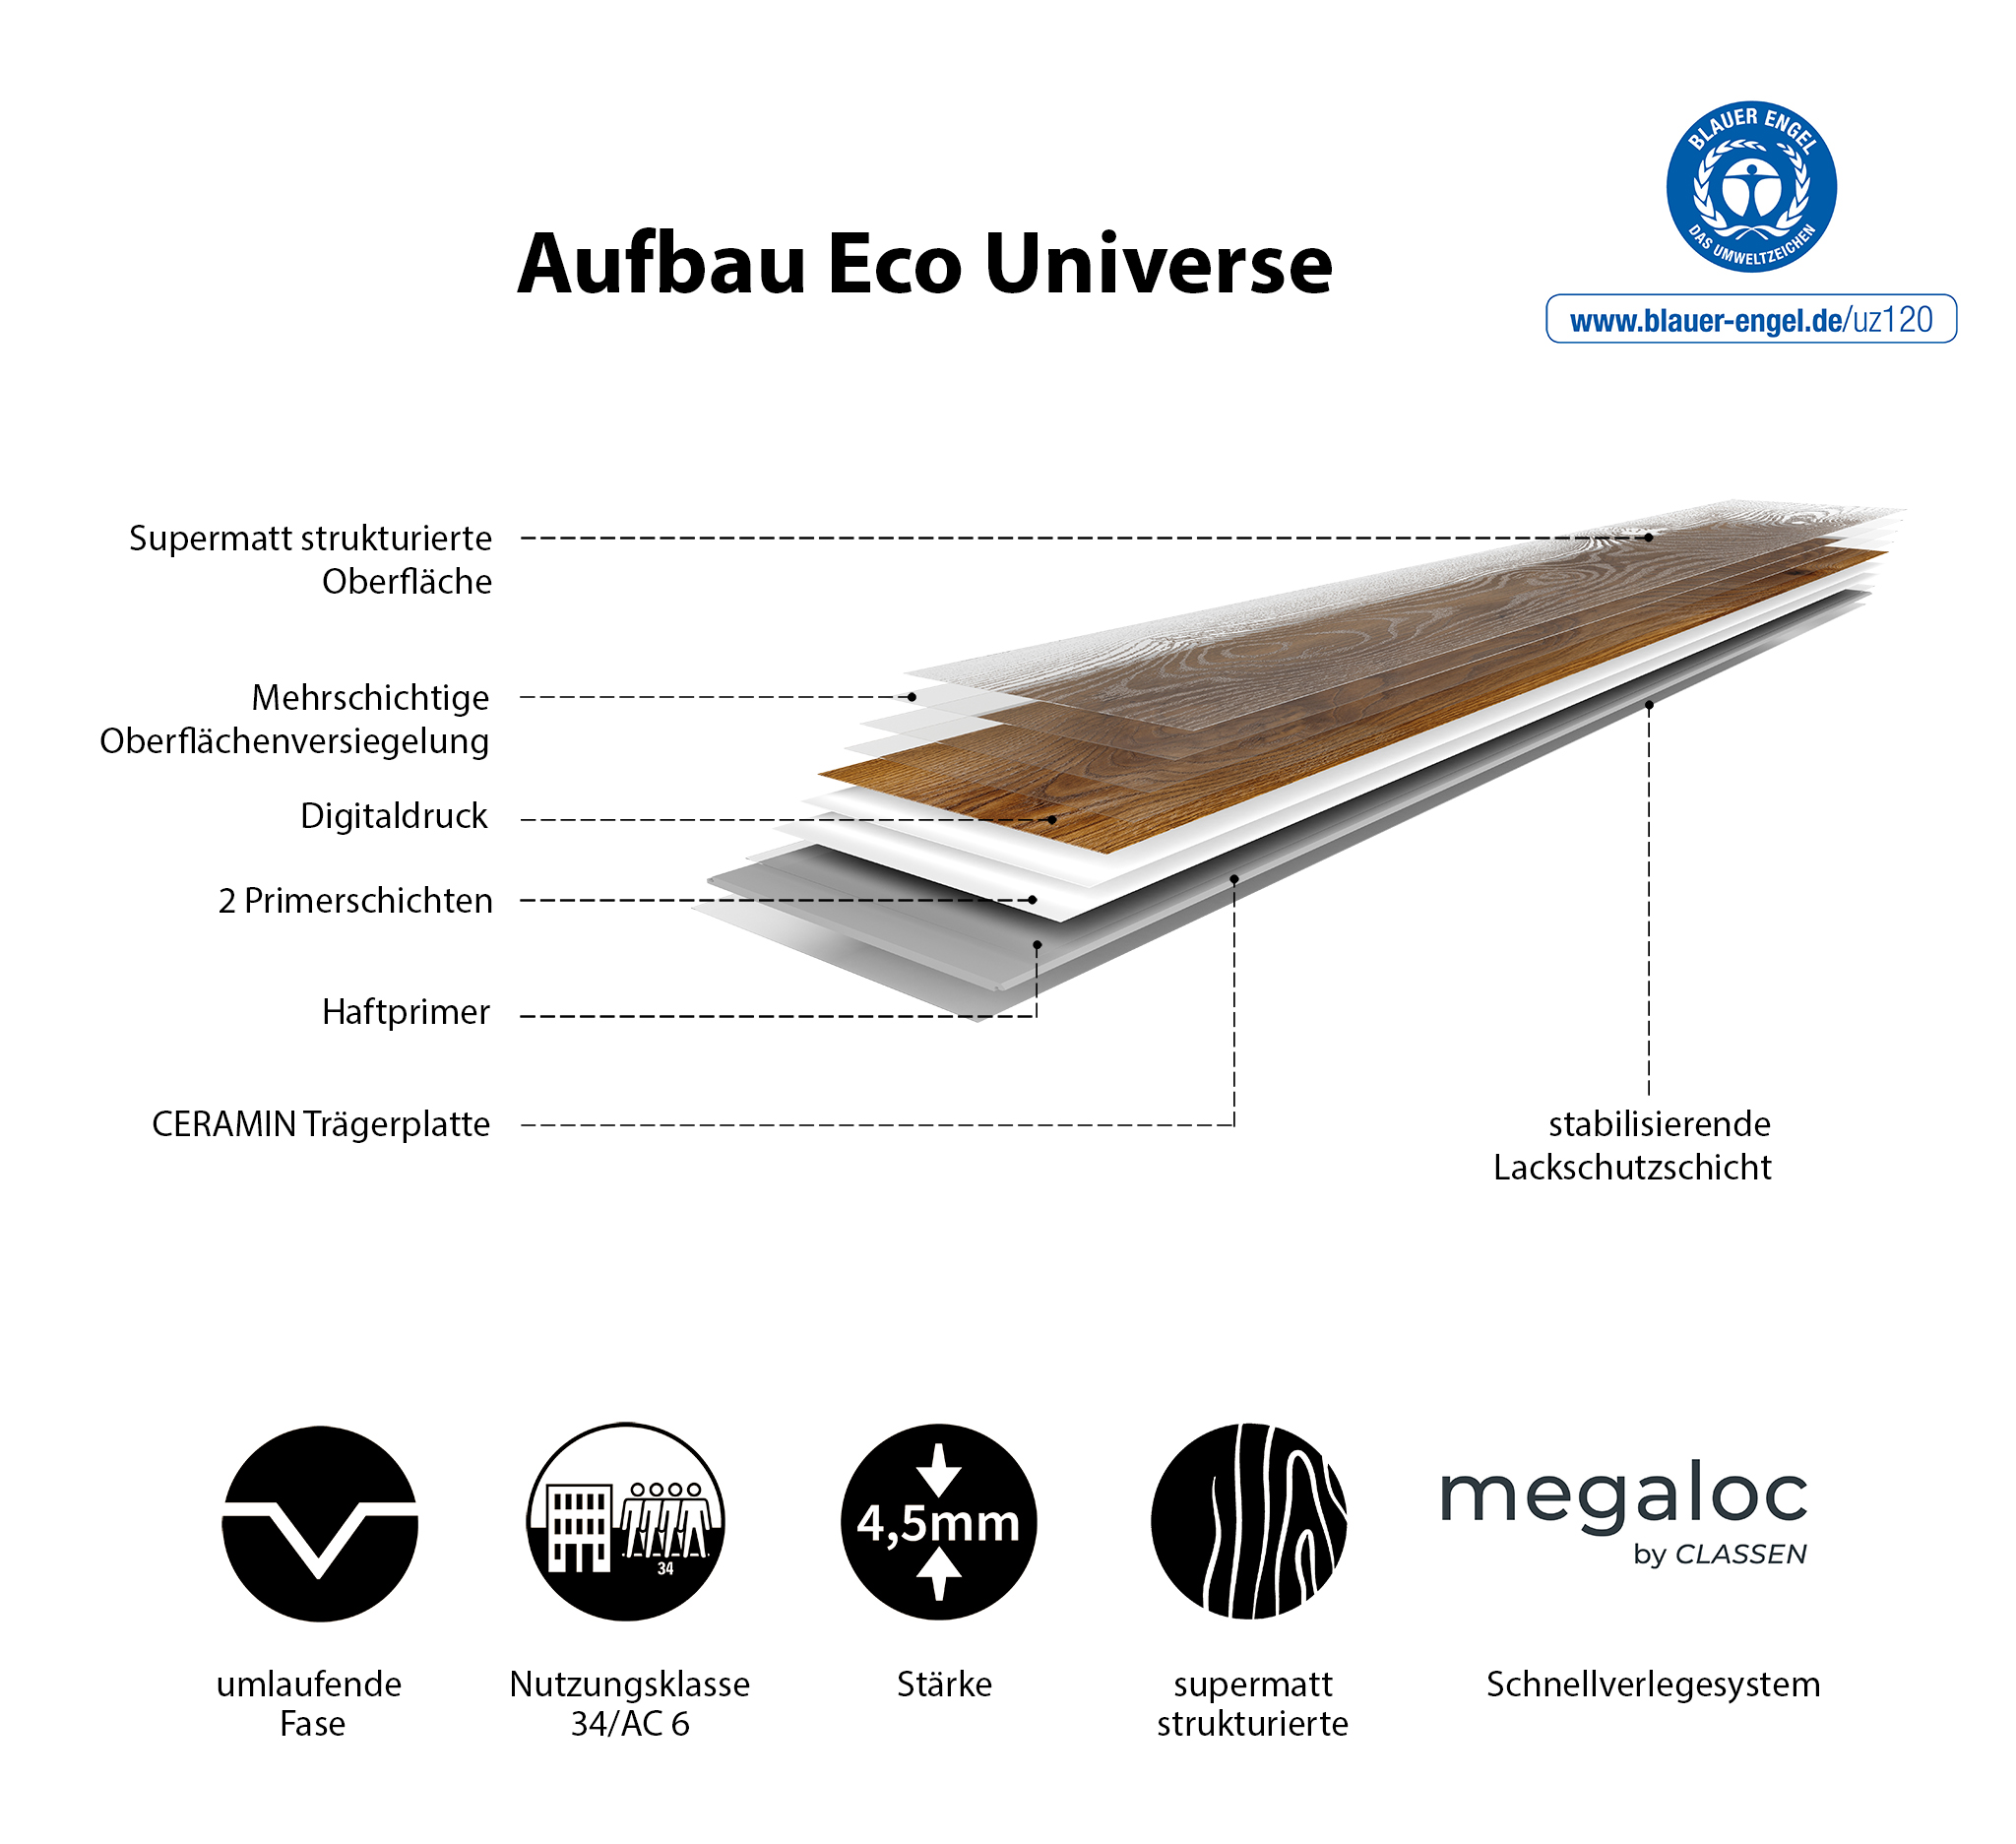 Universe Wood Vevey design podlaha 4V